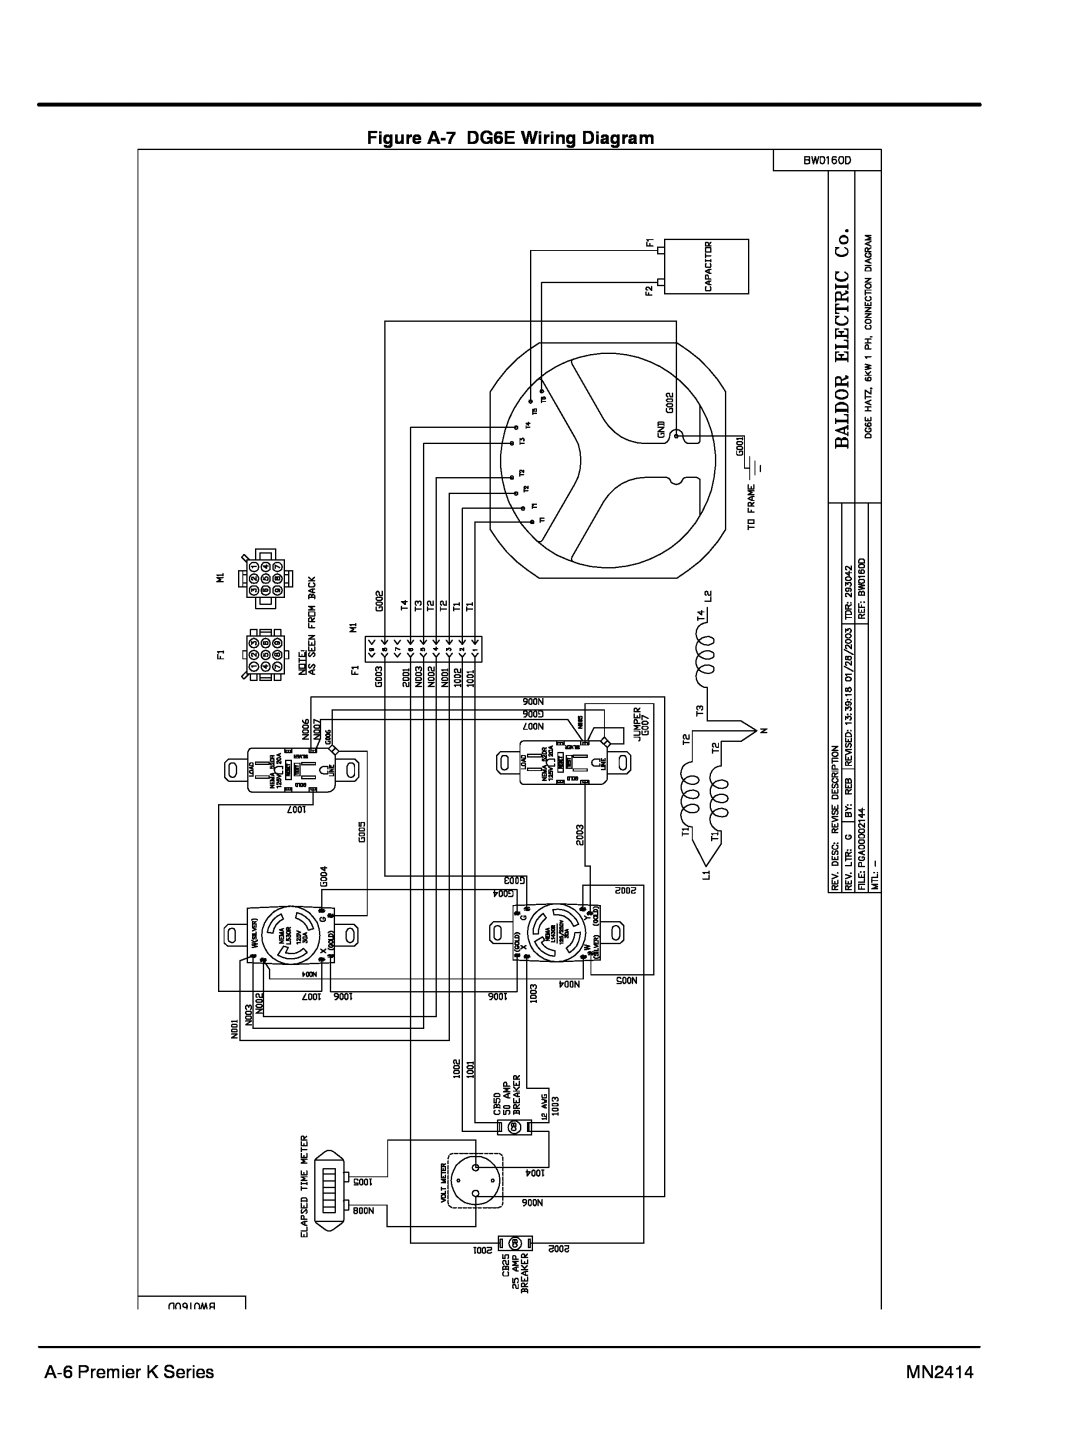 Baldor DG3E manual Figure A-7 DG6E Wiring Diagram, A-6 Premier K Series, MN2414 